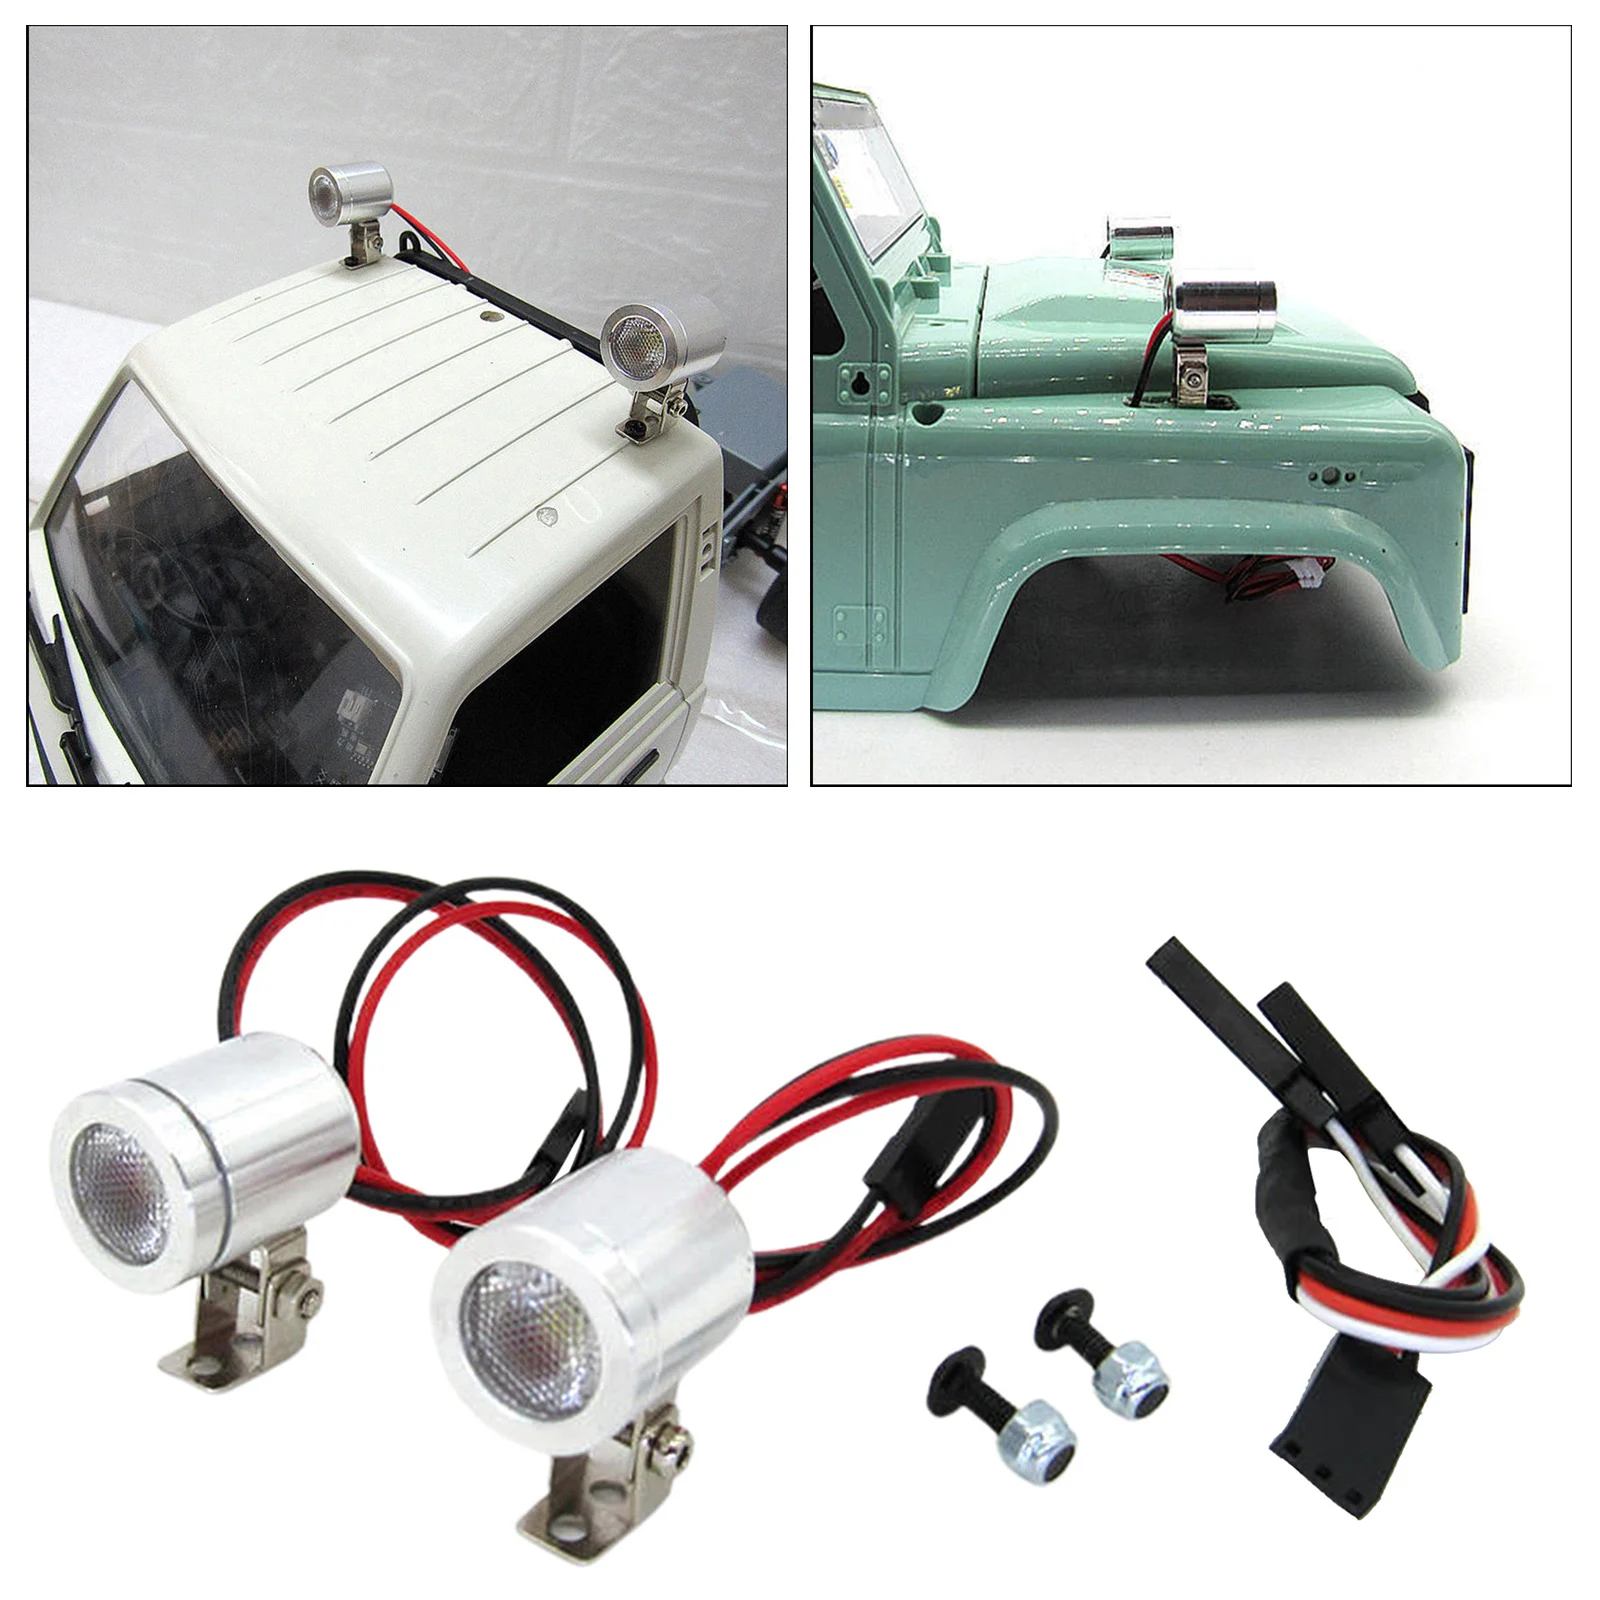 2x RC Spotlights Front Light for MN D90 D91 D99 MN90 WPL D12 B14 Spare Parts